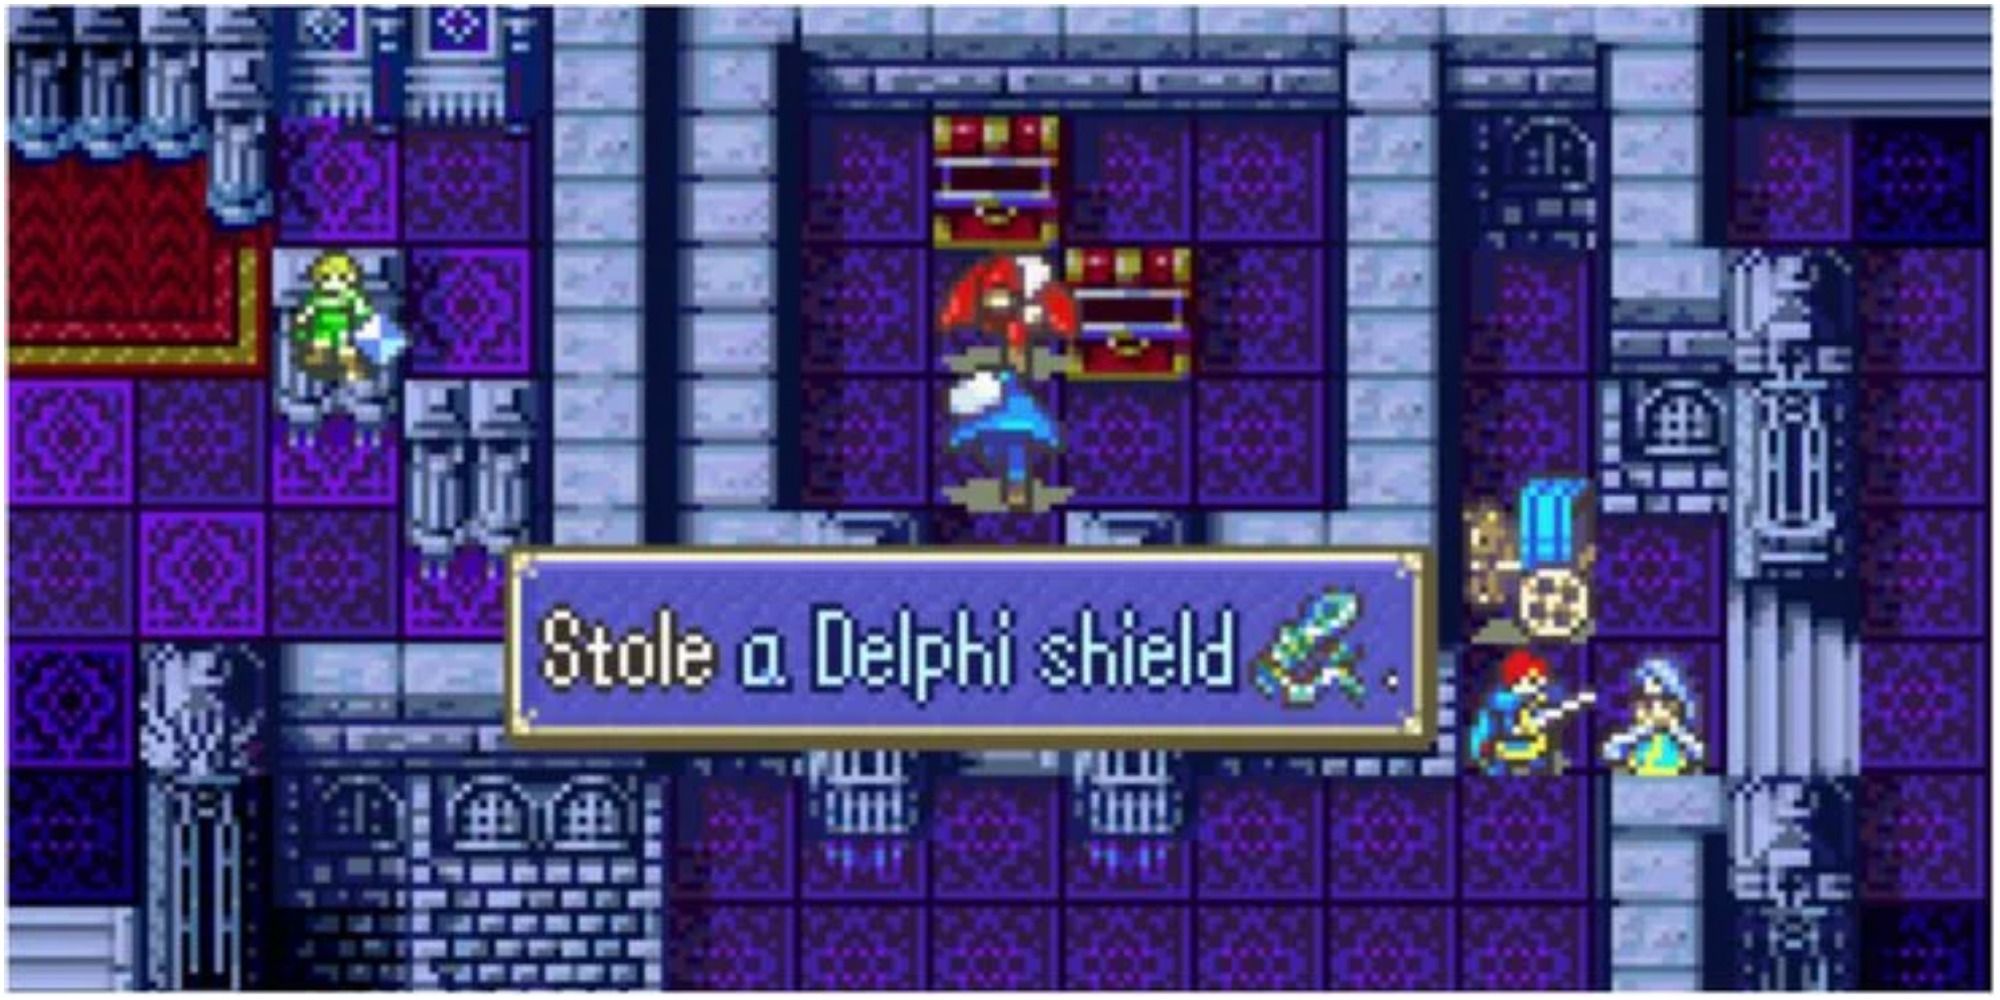 delphi shield fire emblem screenshot in castle room looting chests